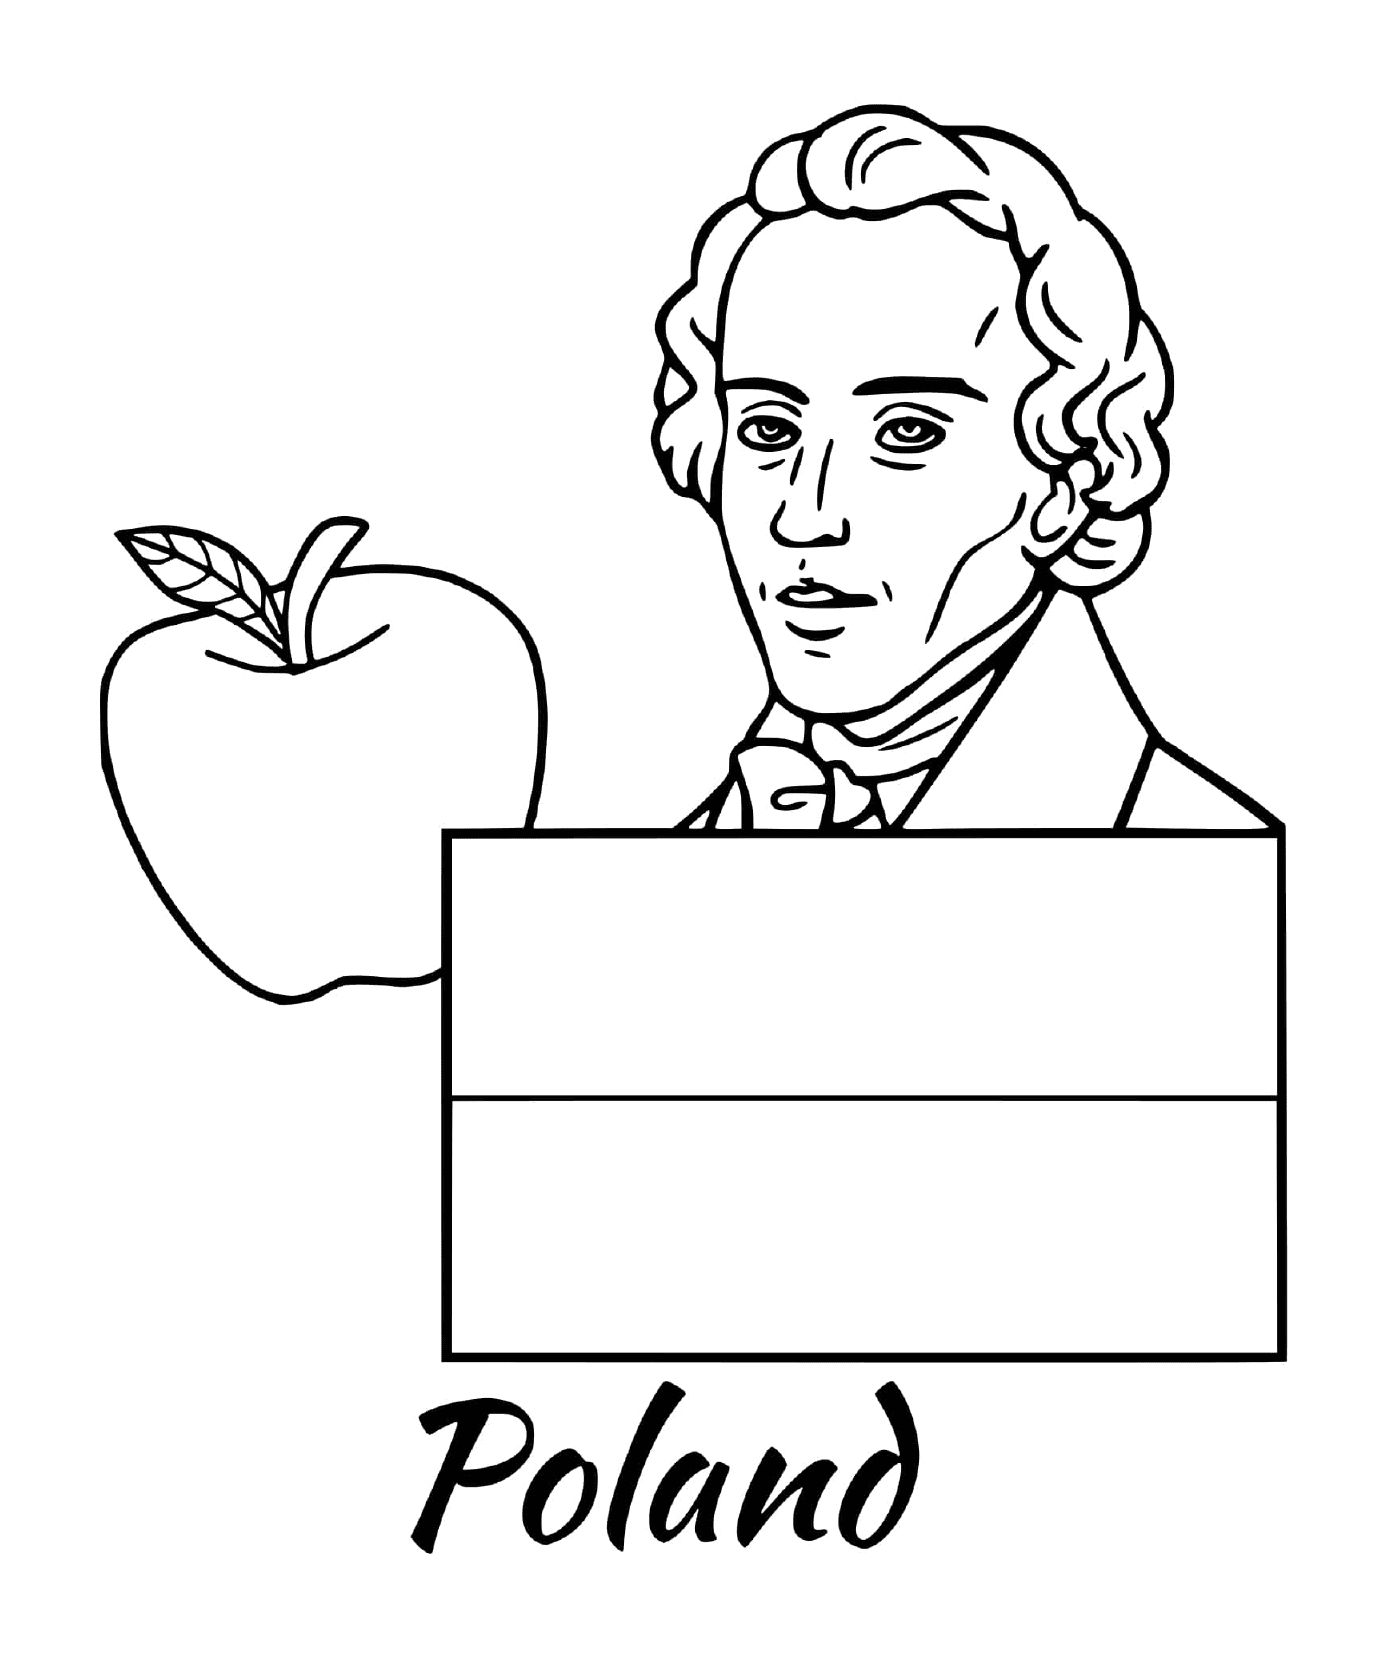  Flag of Poland, Chopin 